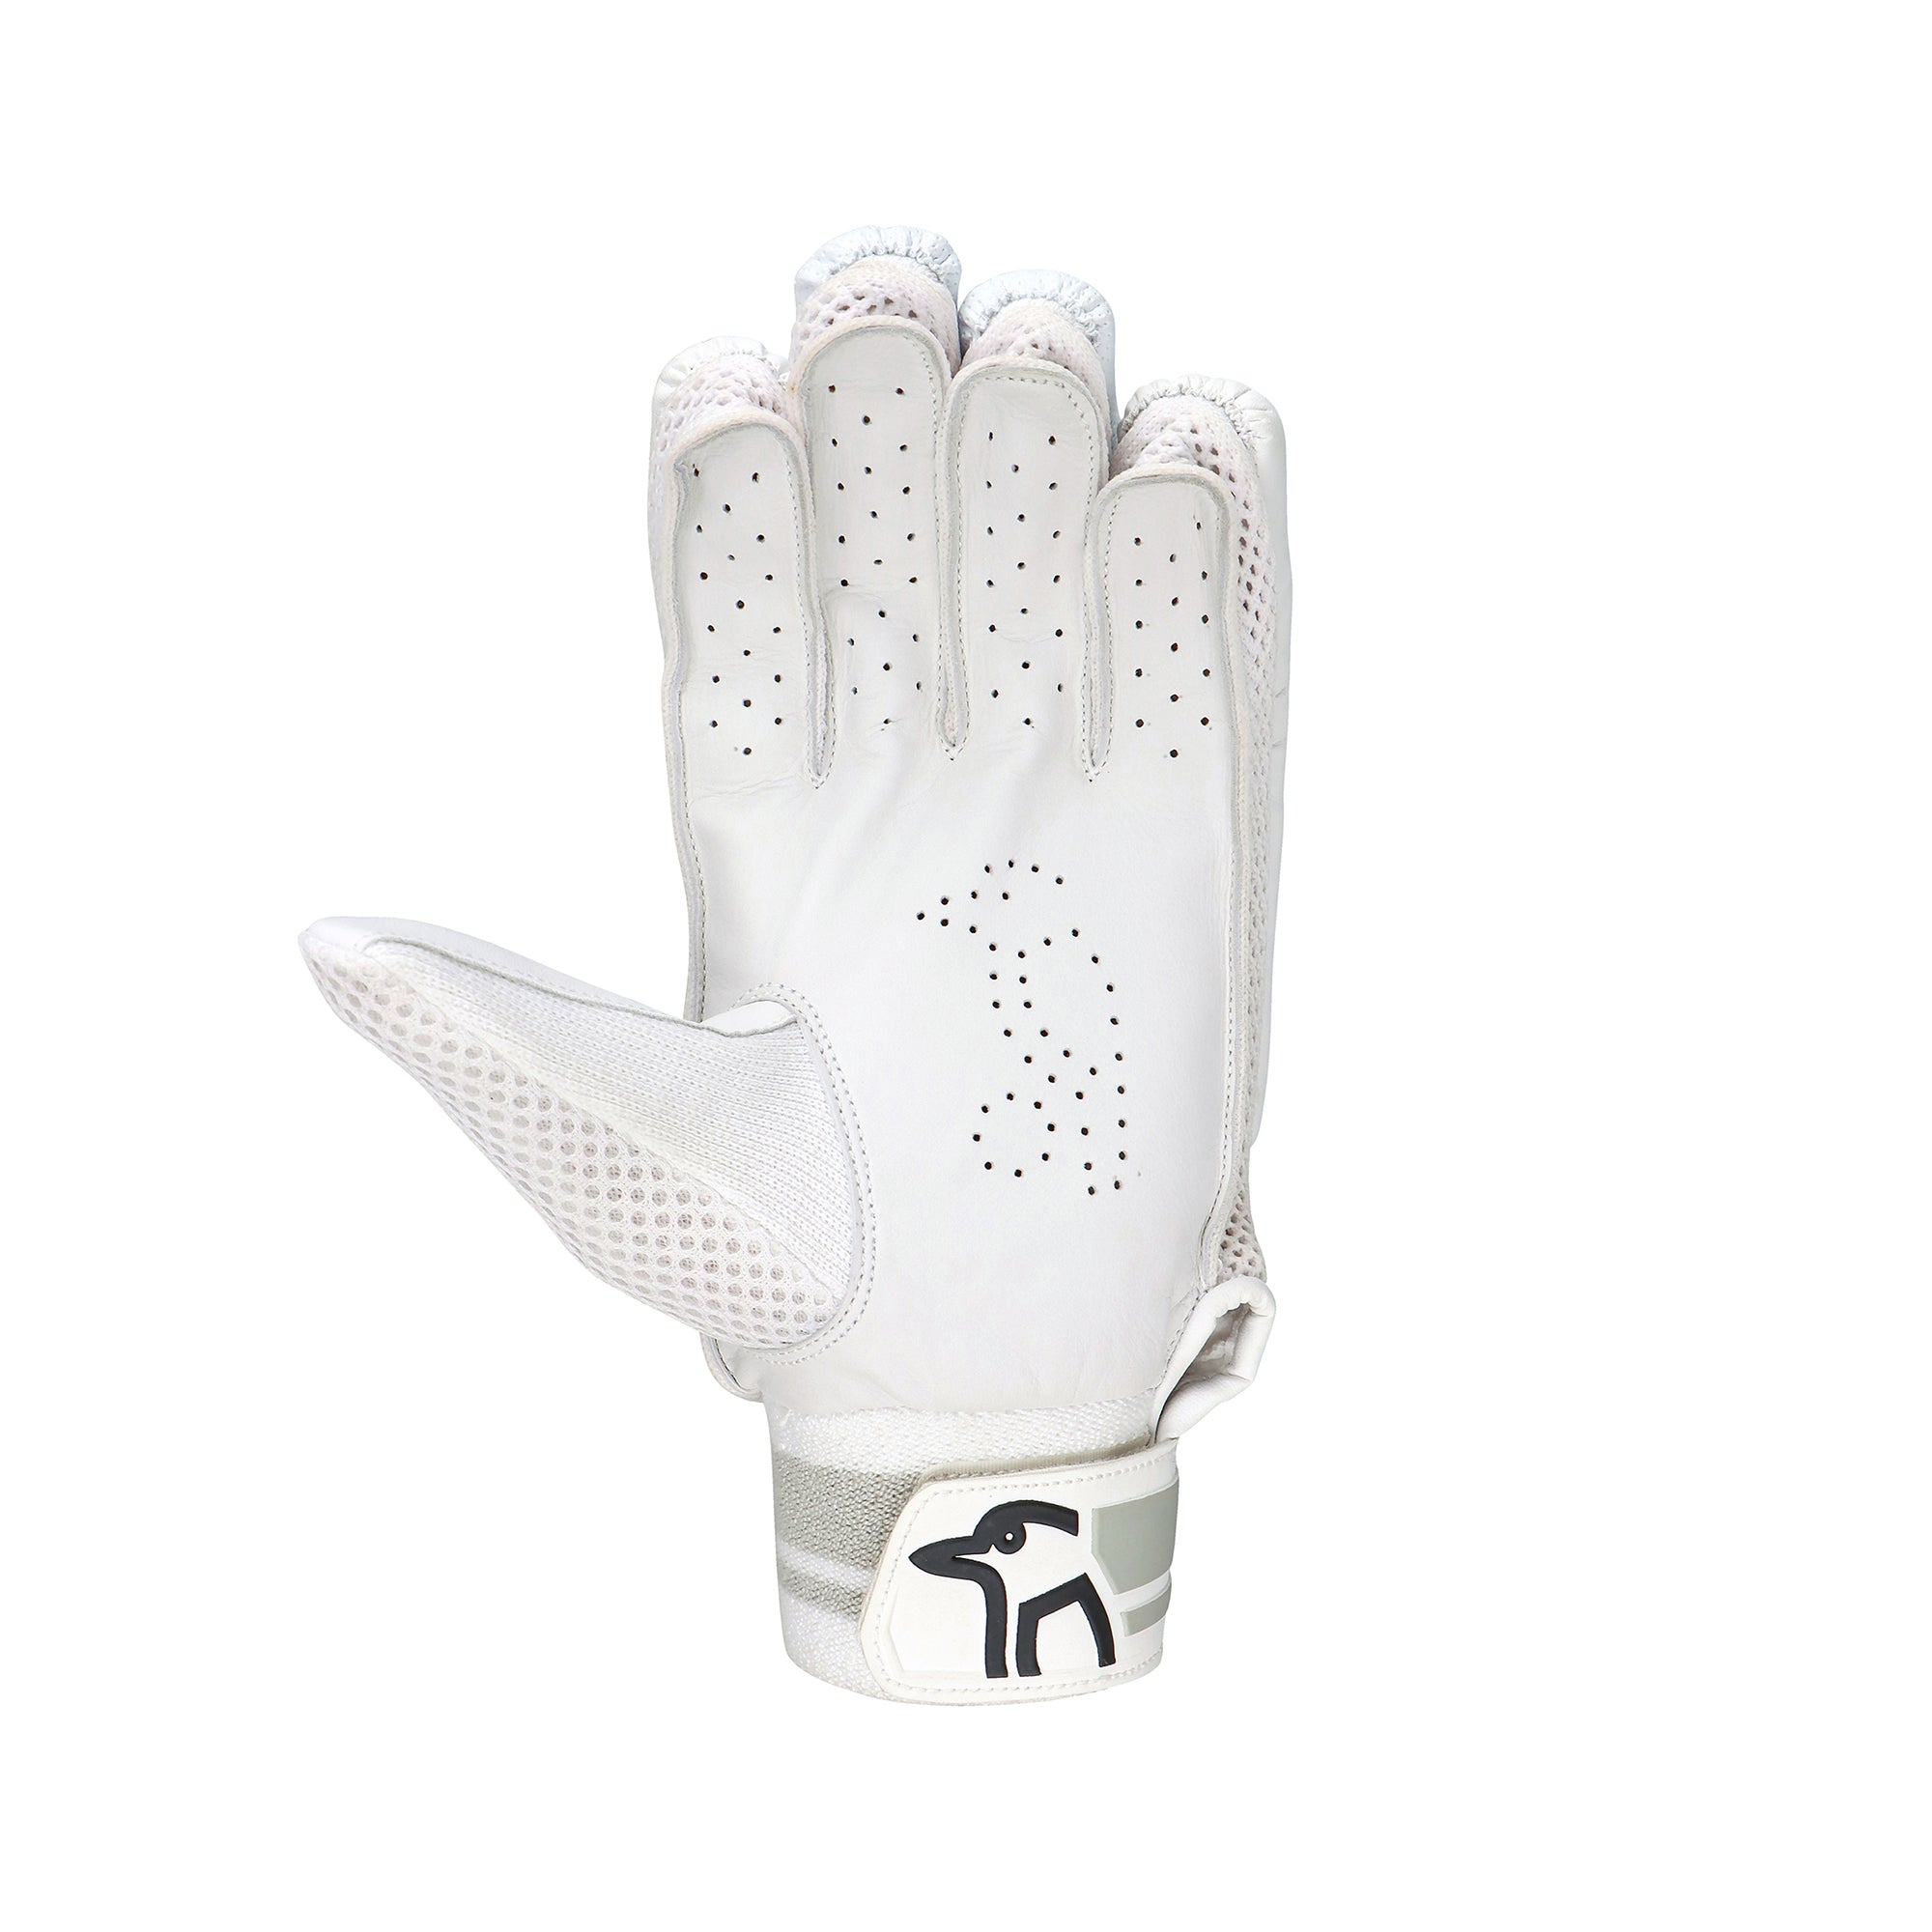 Kookaburra Ghost Pro 7.0 Batting Gloves